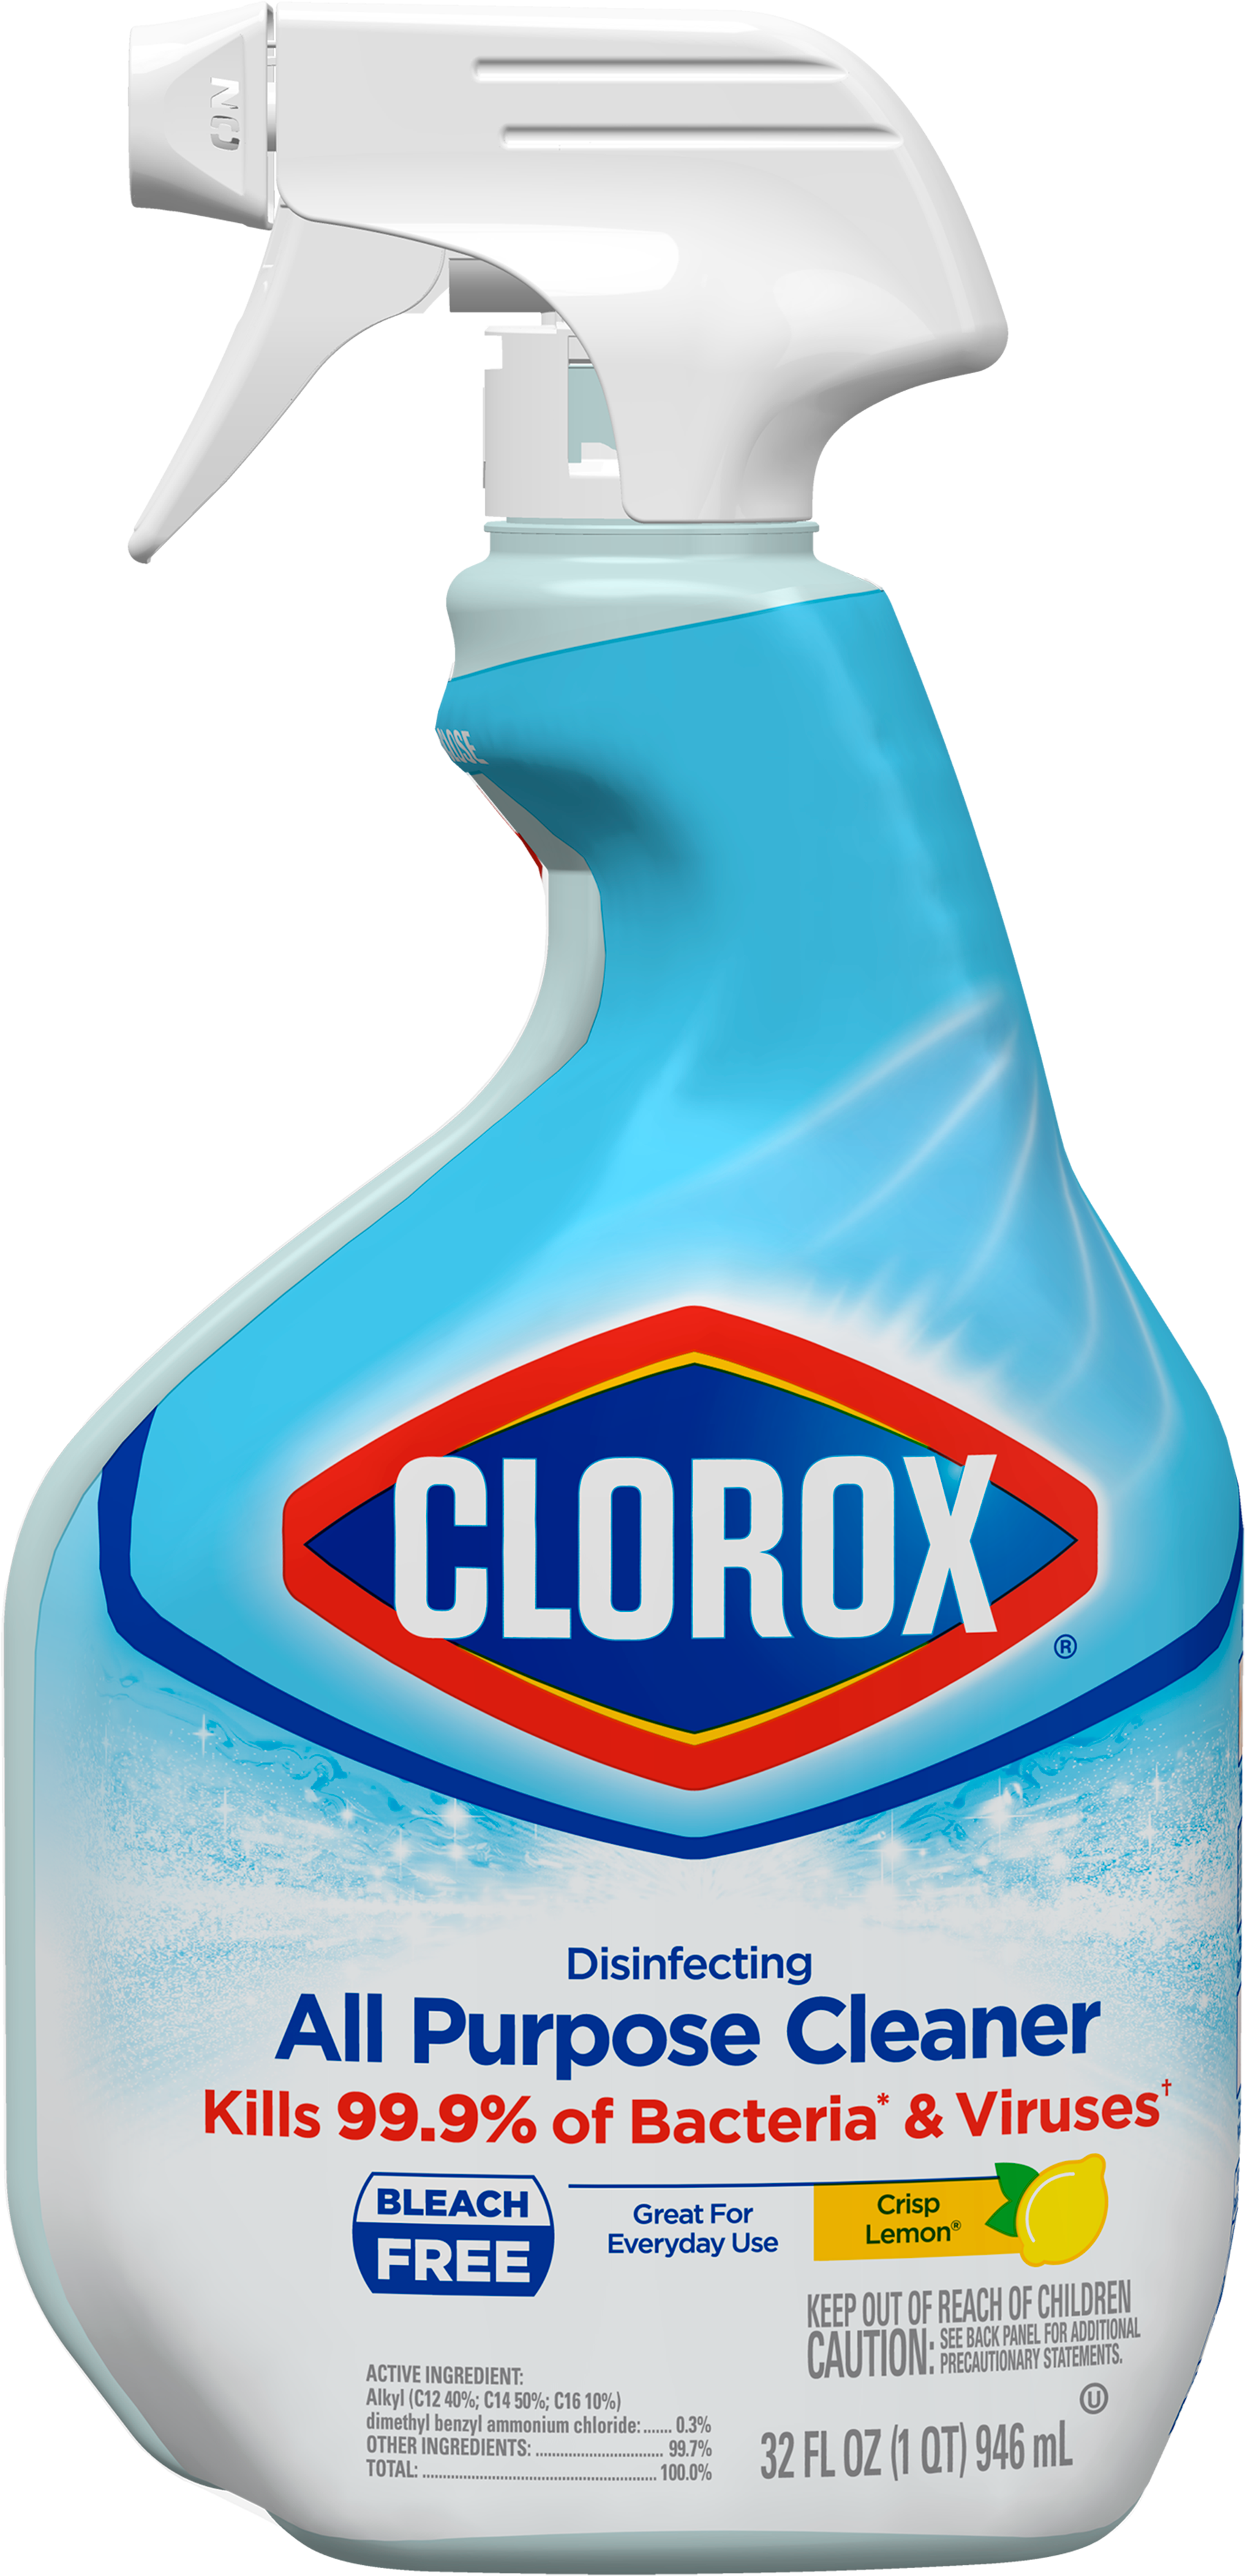 All-Purpose Cleaner Clorox